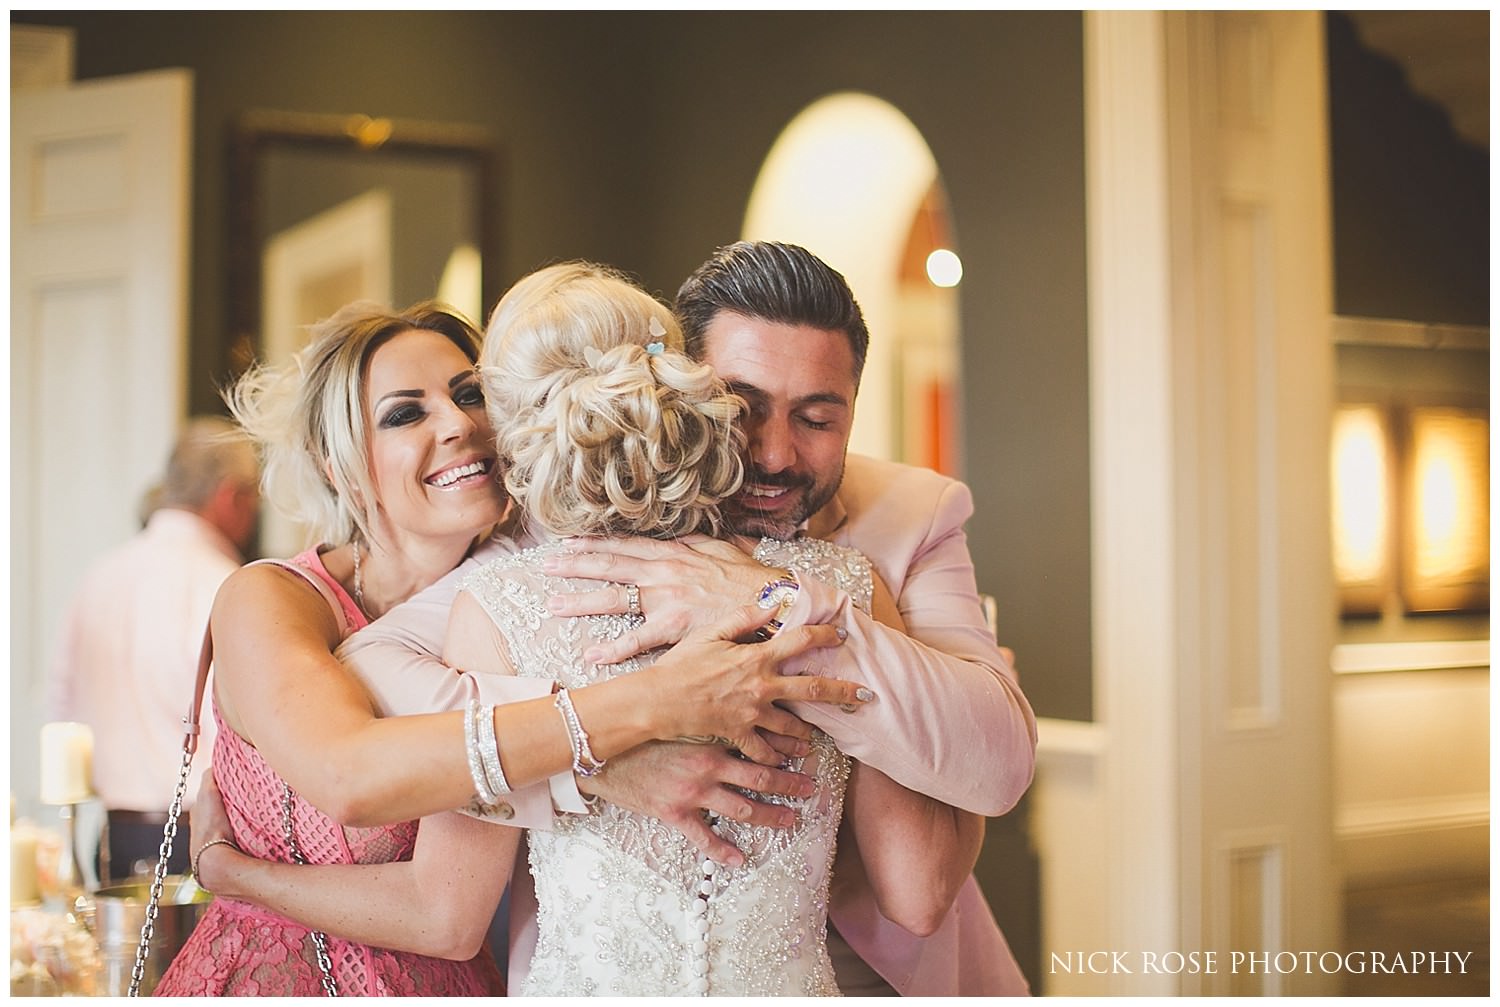  Guests hugging bride at a Rudding Park Hotel wedding reception in Harrogate 